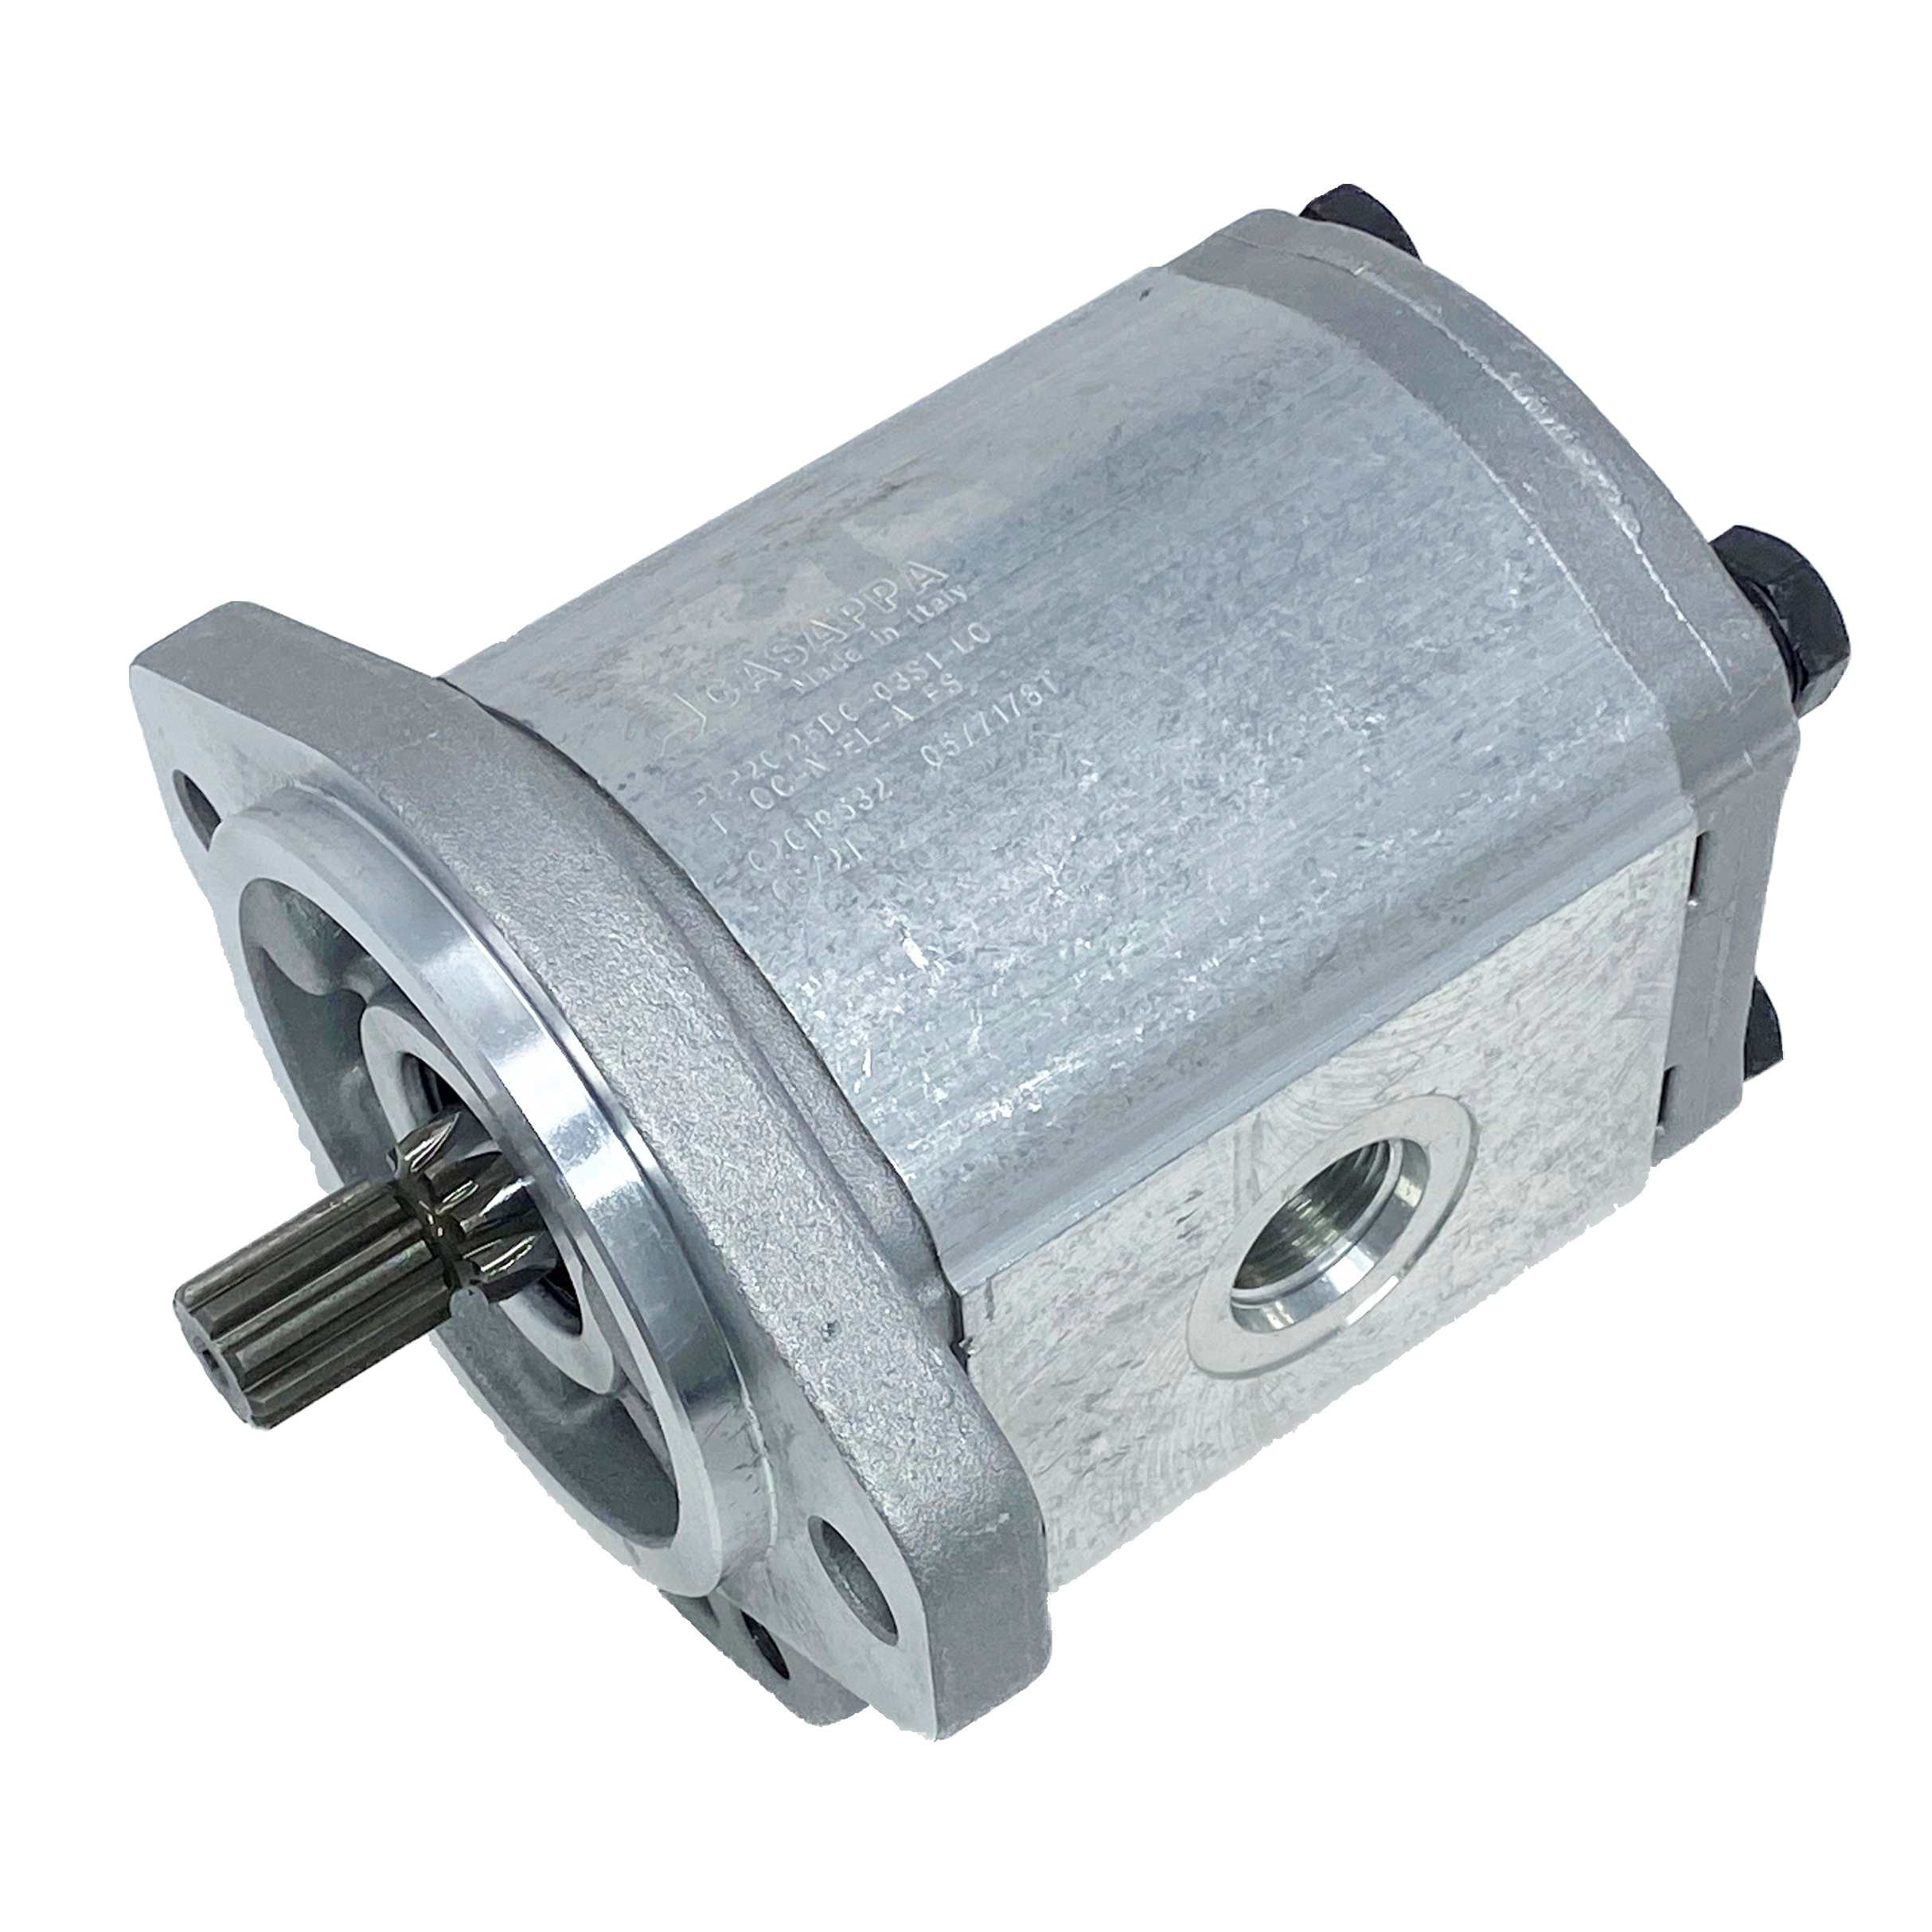 PLM20.31,5B0-07S1-LOC/OD-N-EL : Casappa Polaris Gear Motor, 33.03cc, 1885psi Rated, 2465RPM, Reversible Interior Drain, 11T 16/32dp Shaft, SAE A 2-Bolt Flange, 0.625 (5/8") #10 SAE Inlet, 0.75 (3/4") #12 SAE Outlet, Aluminum Body & Flange